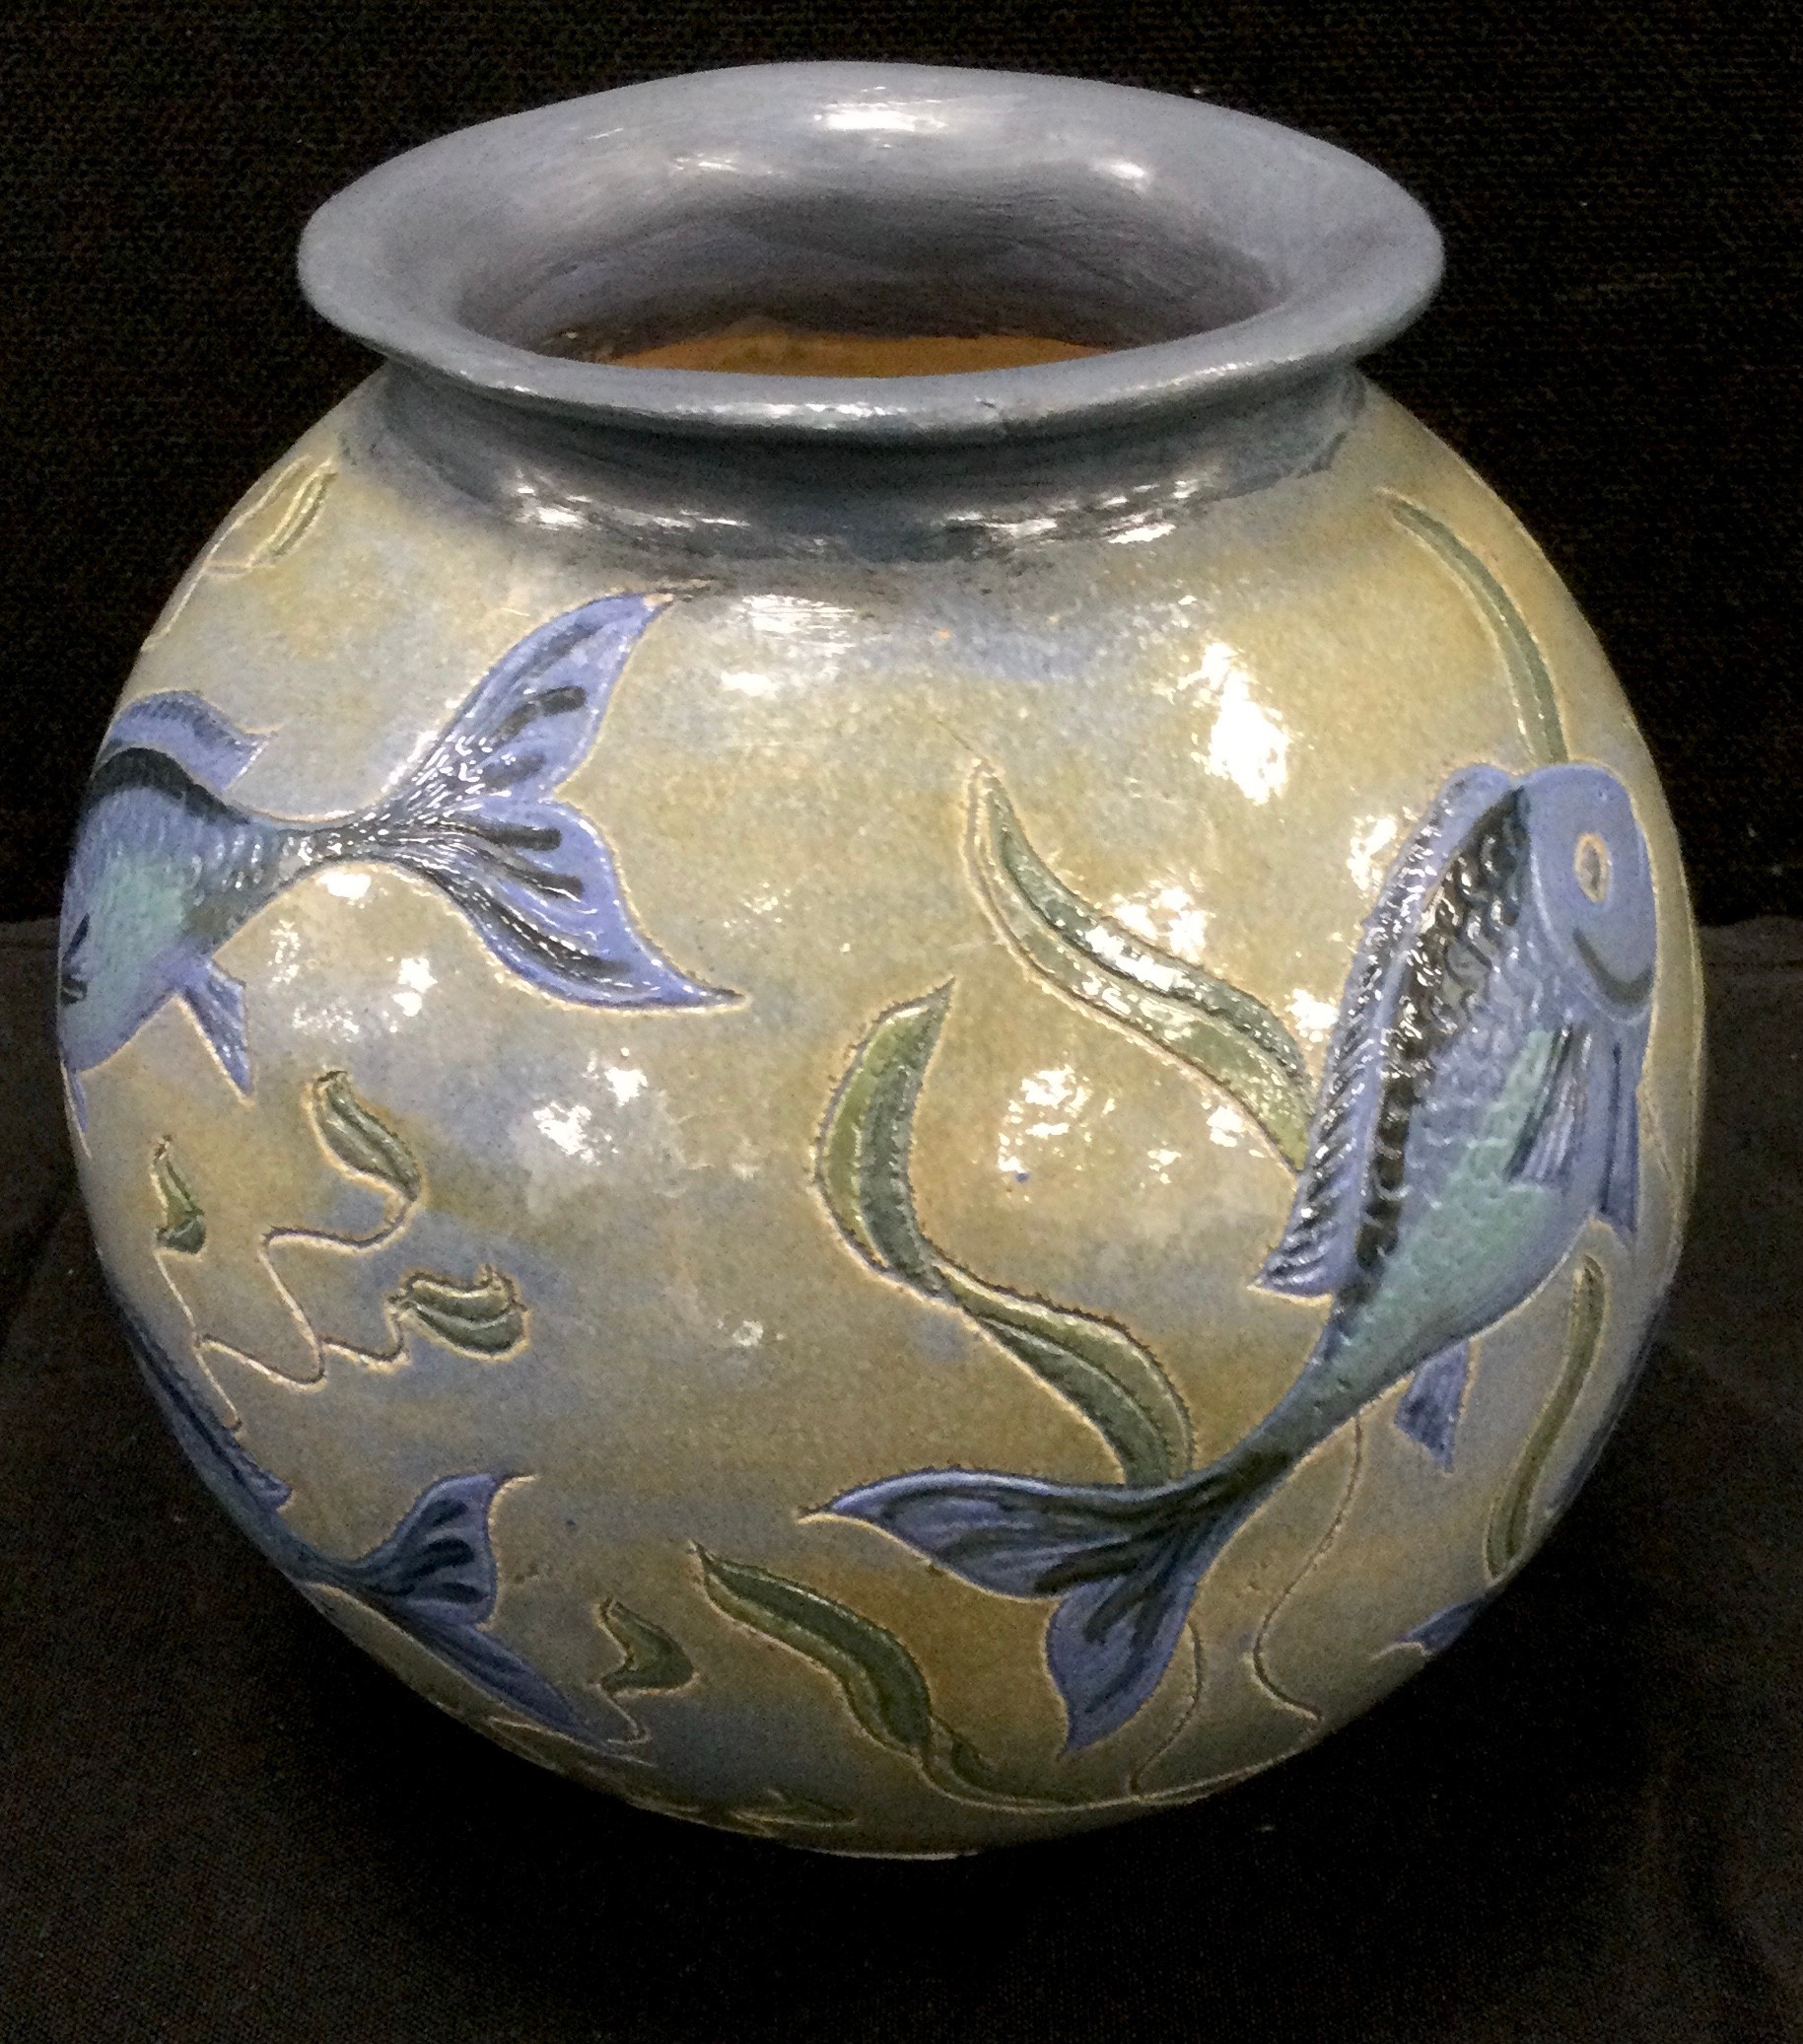 A Sgraffito aquarium globular vase, fish and seaweed, blue and green ground, 17cm high, signed S